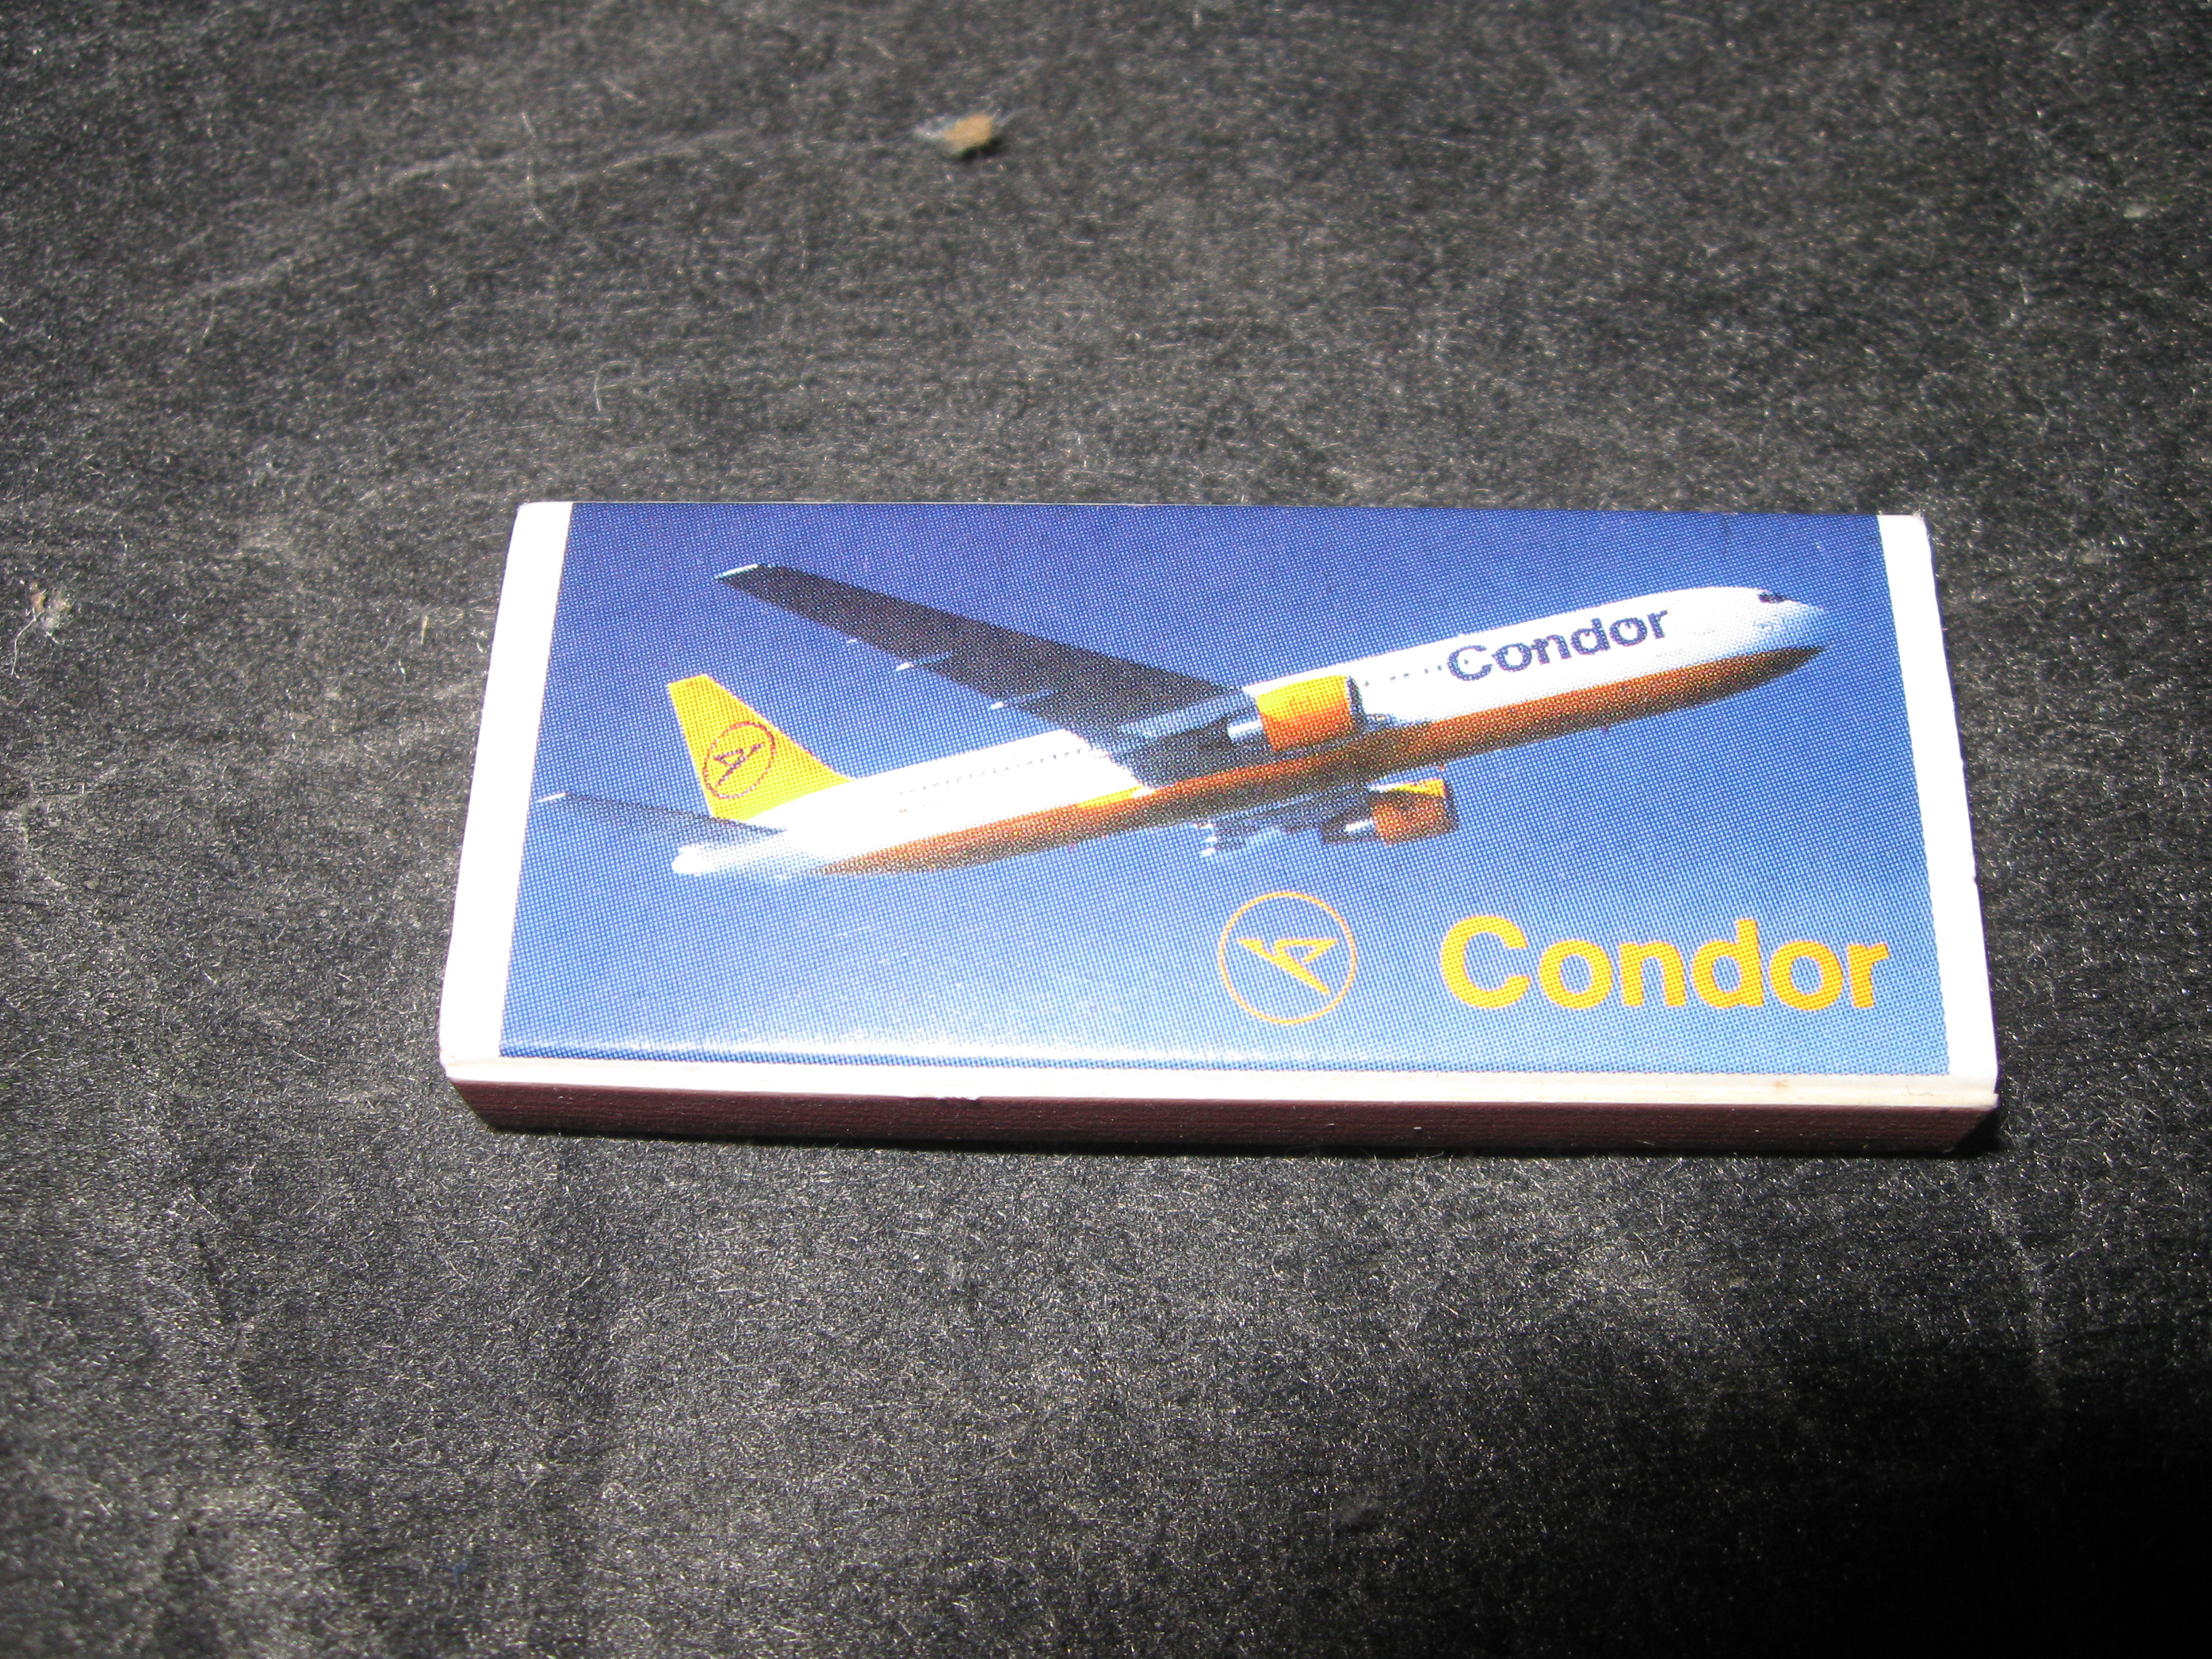 Condor box of matches Marlboro